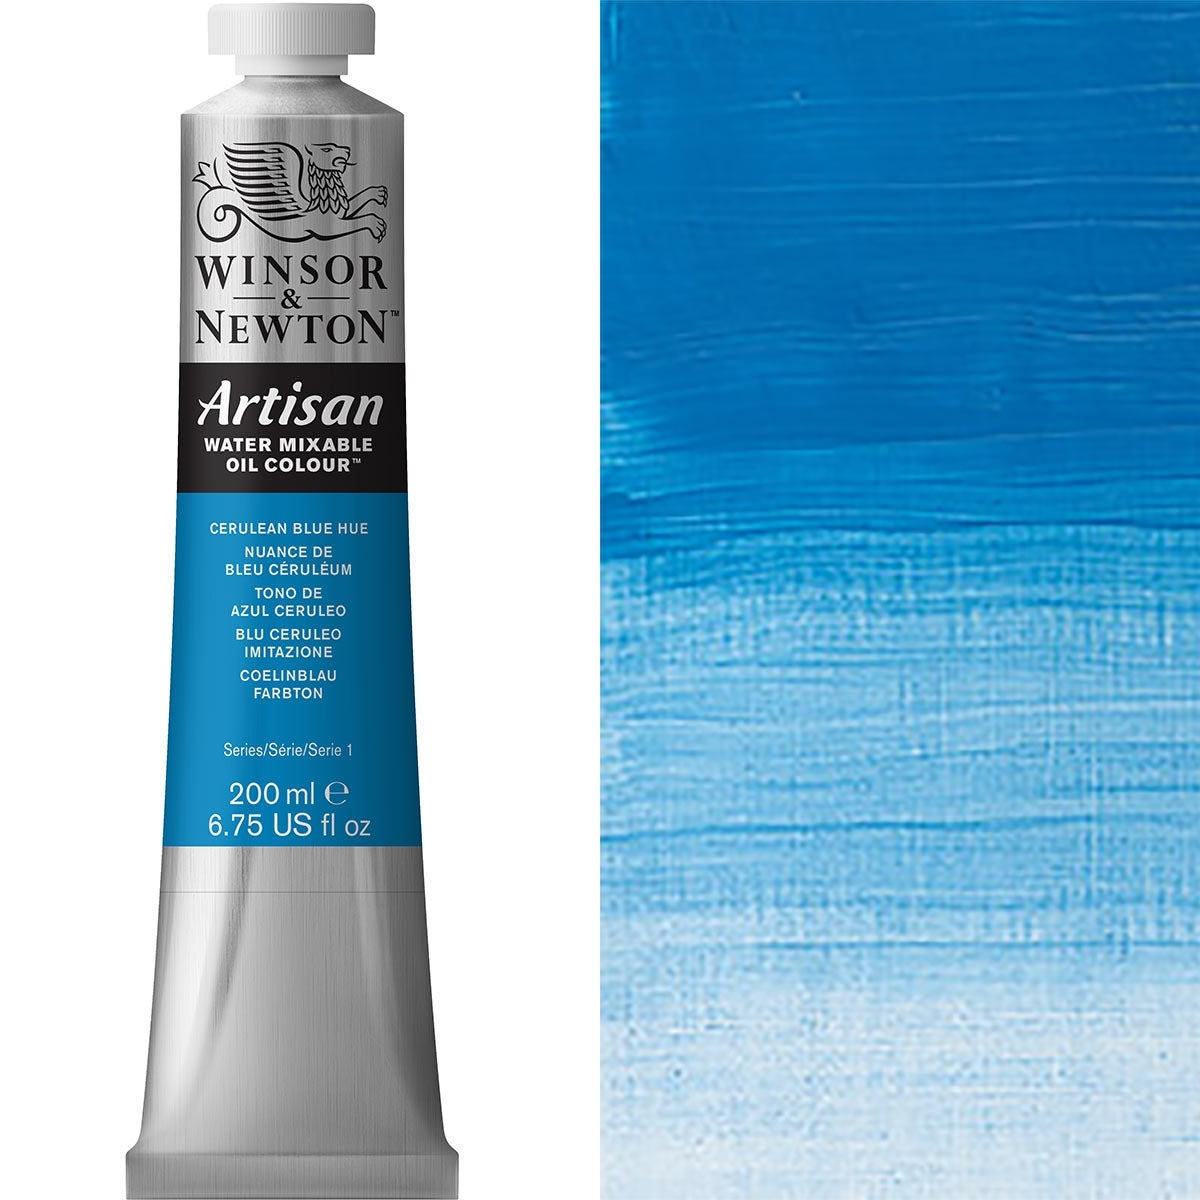 Winsor and Newton - Artisan Oil Colour Watermixable - 200ml - Cerulean Blue Hue